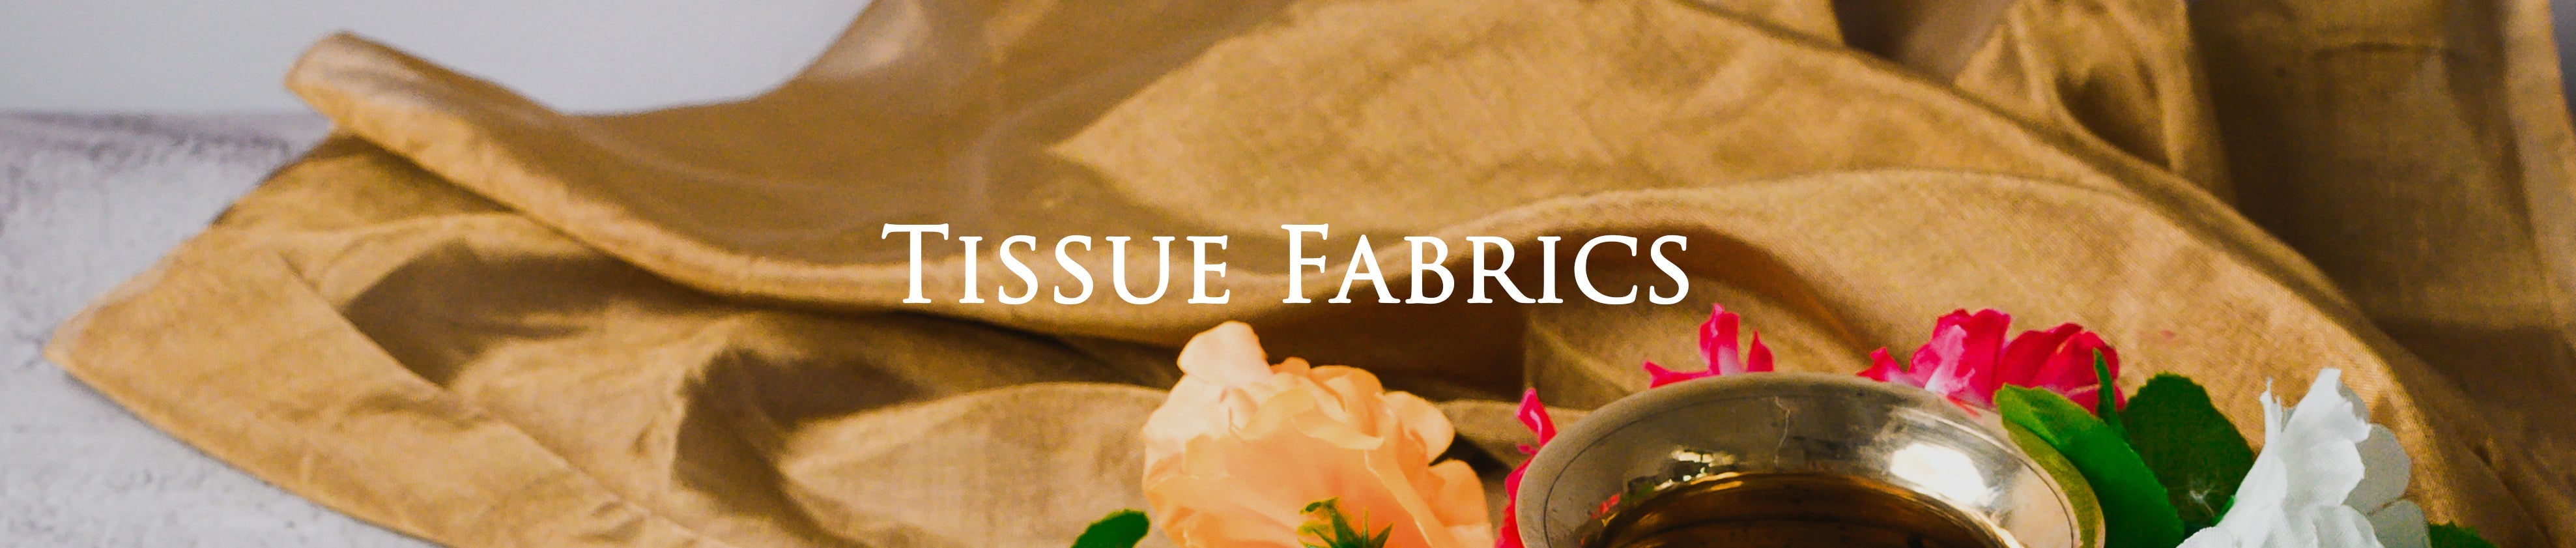 Silk tissue fabric